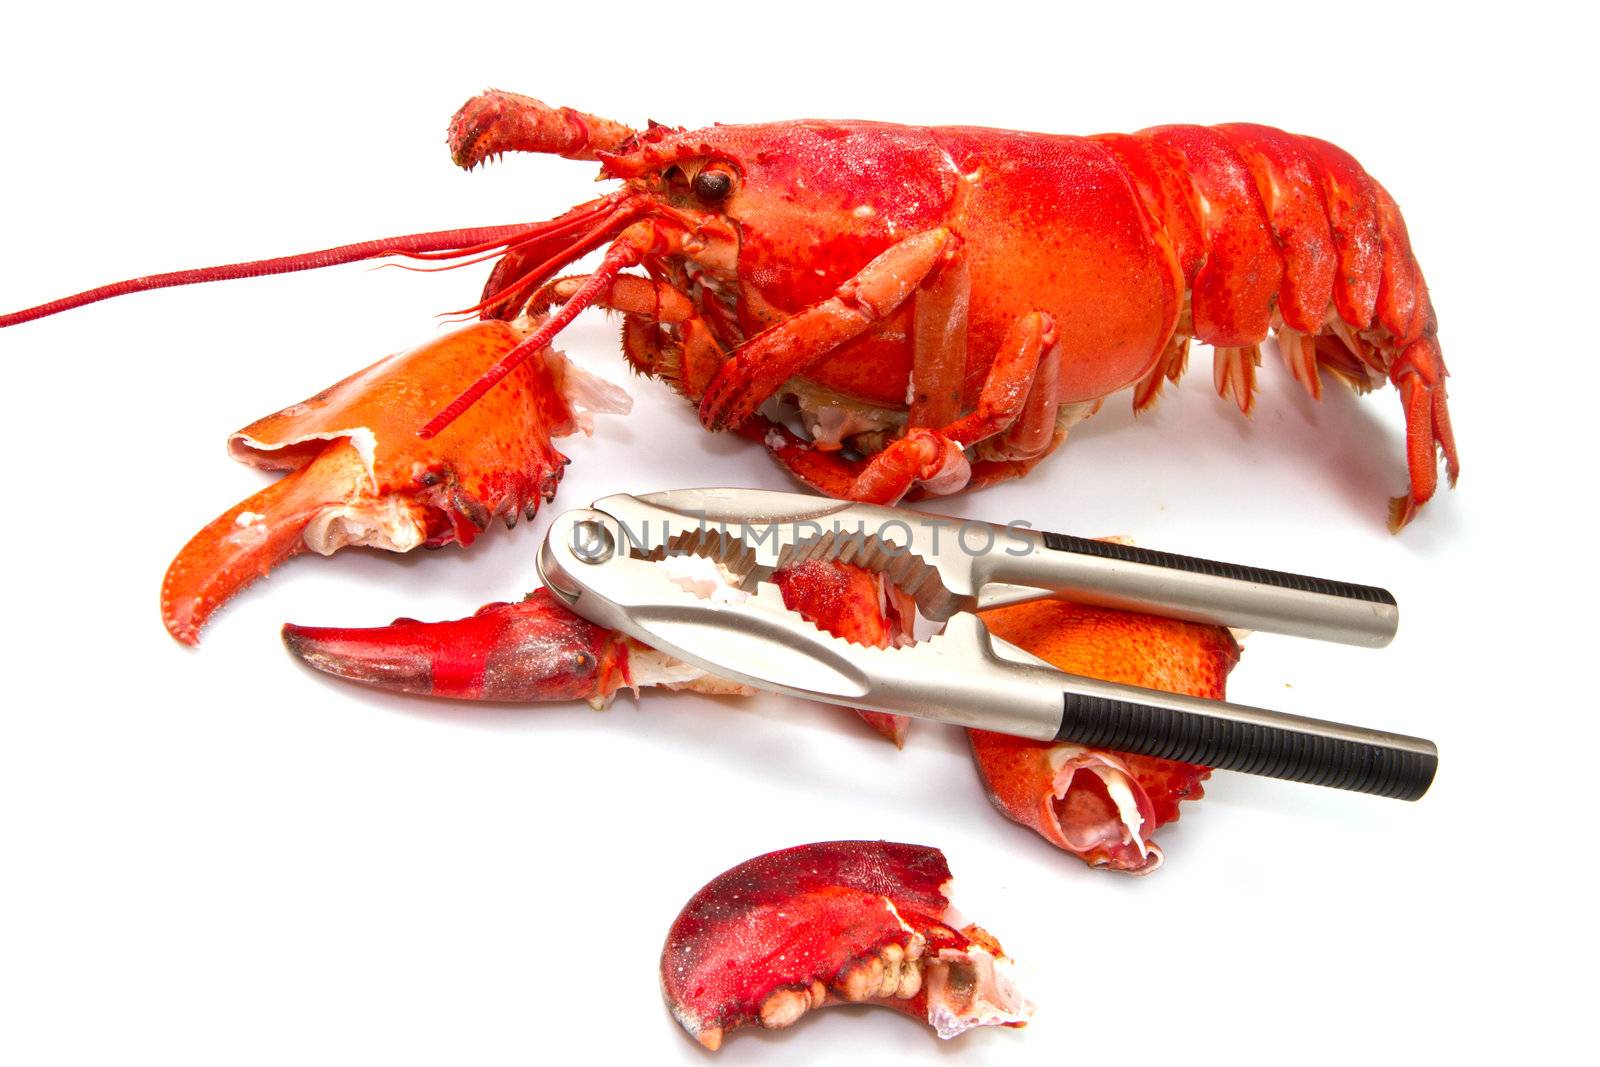 red lobster by lsantilli